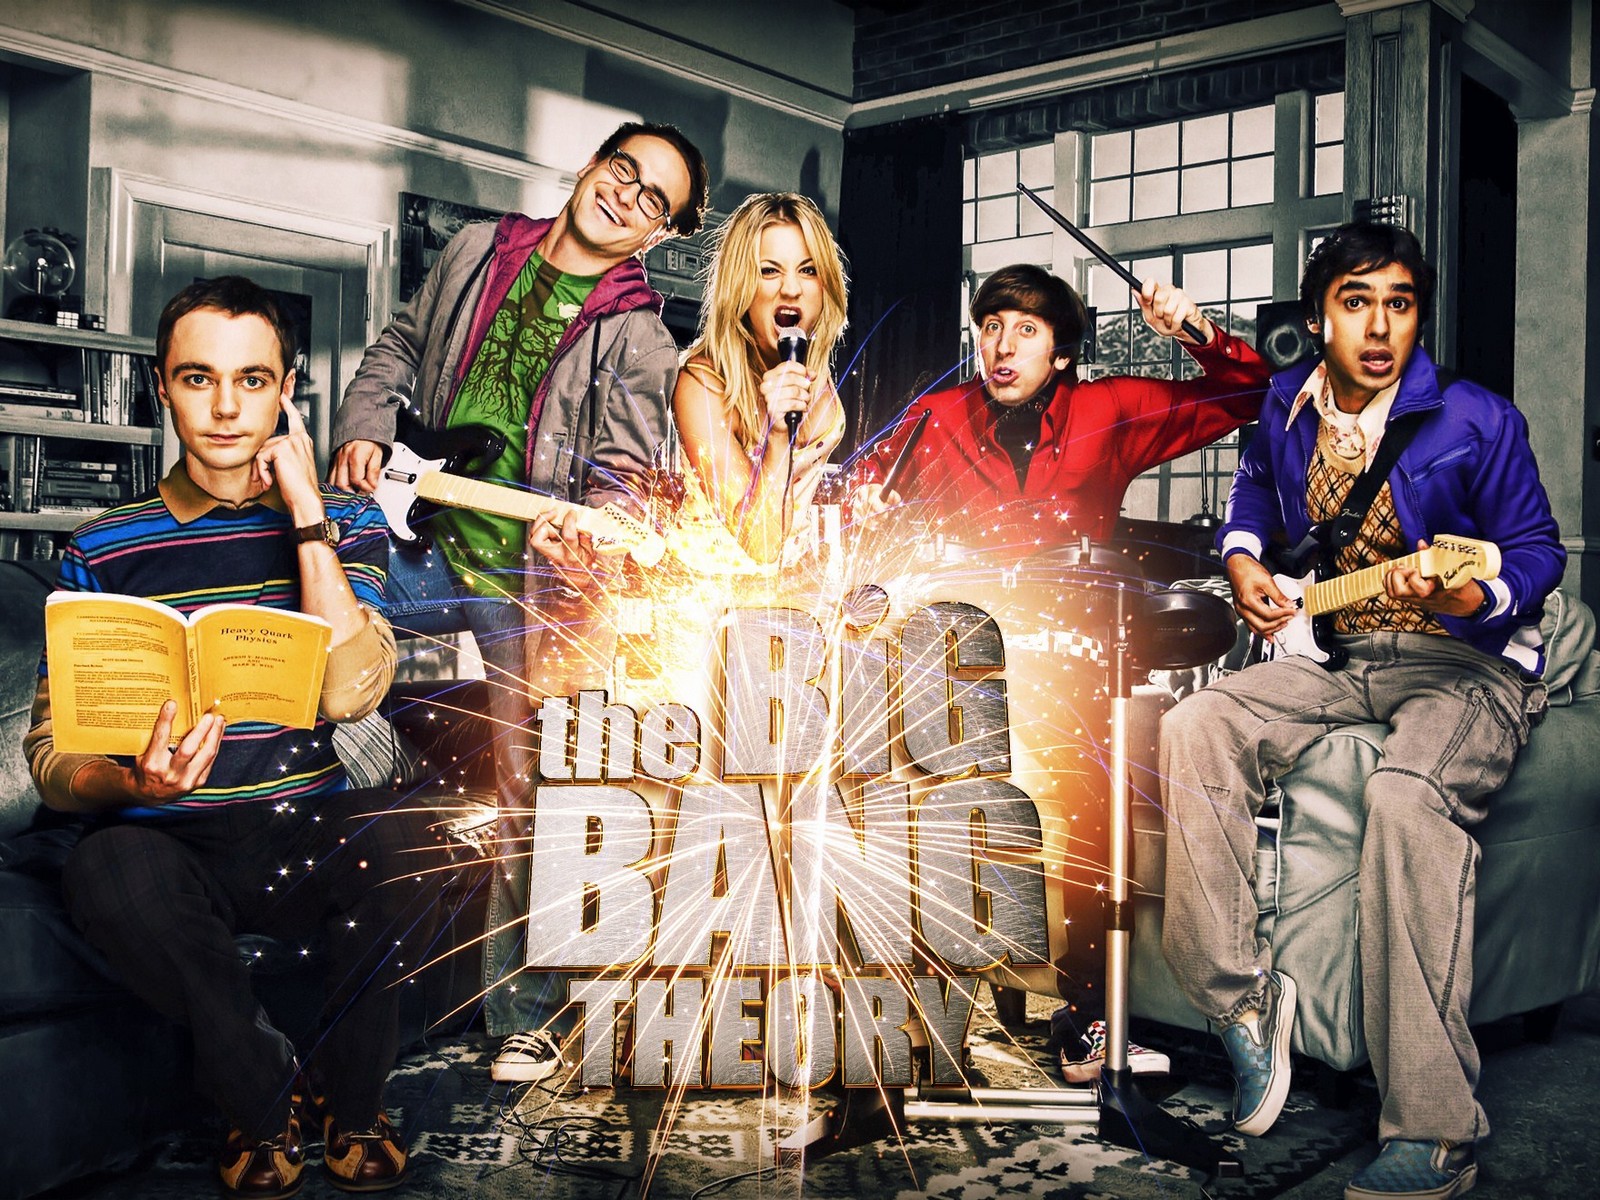 Fondos de Pantalla The Big Bang Theory Película descargar imagenes